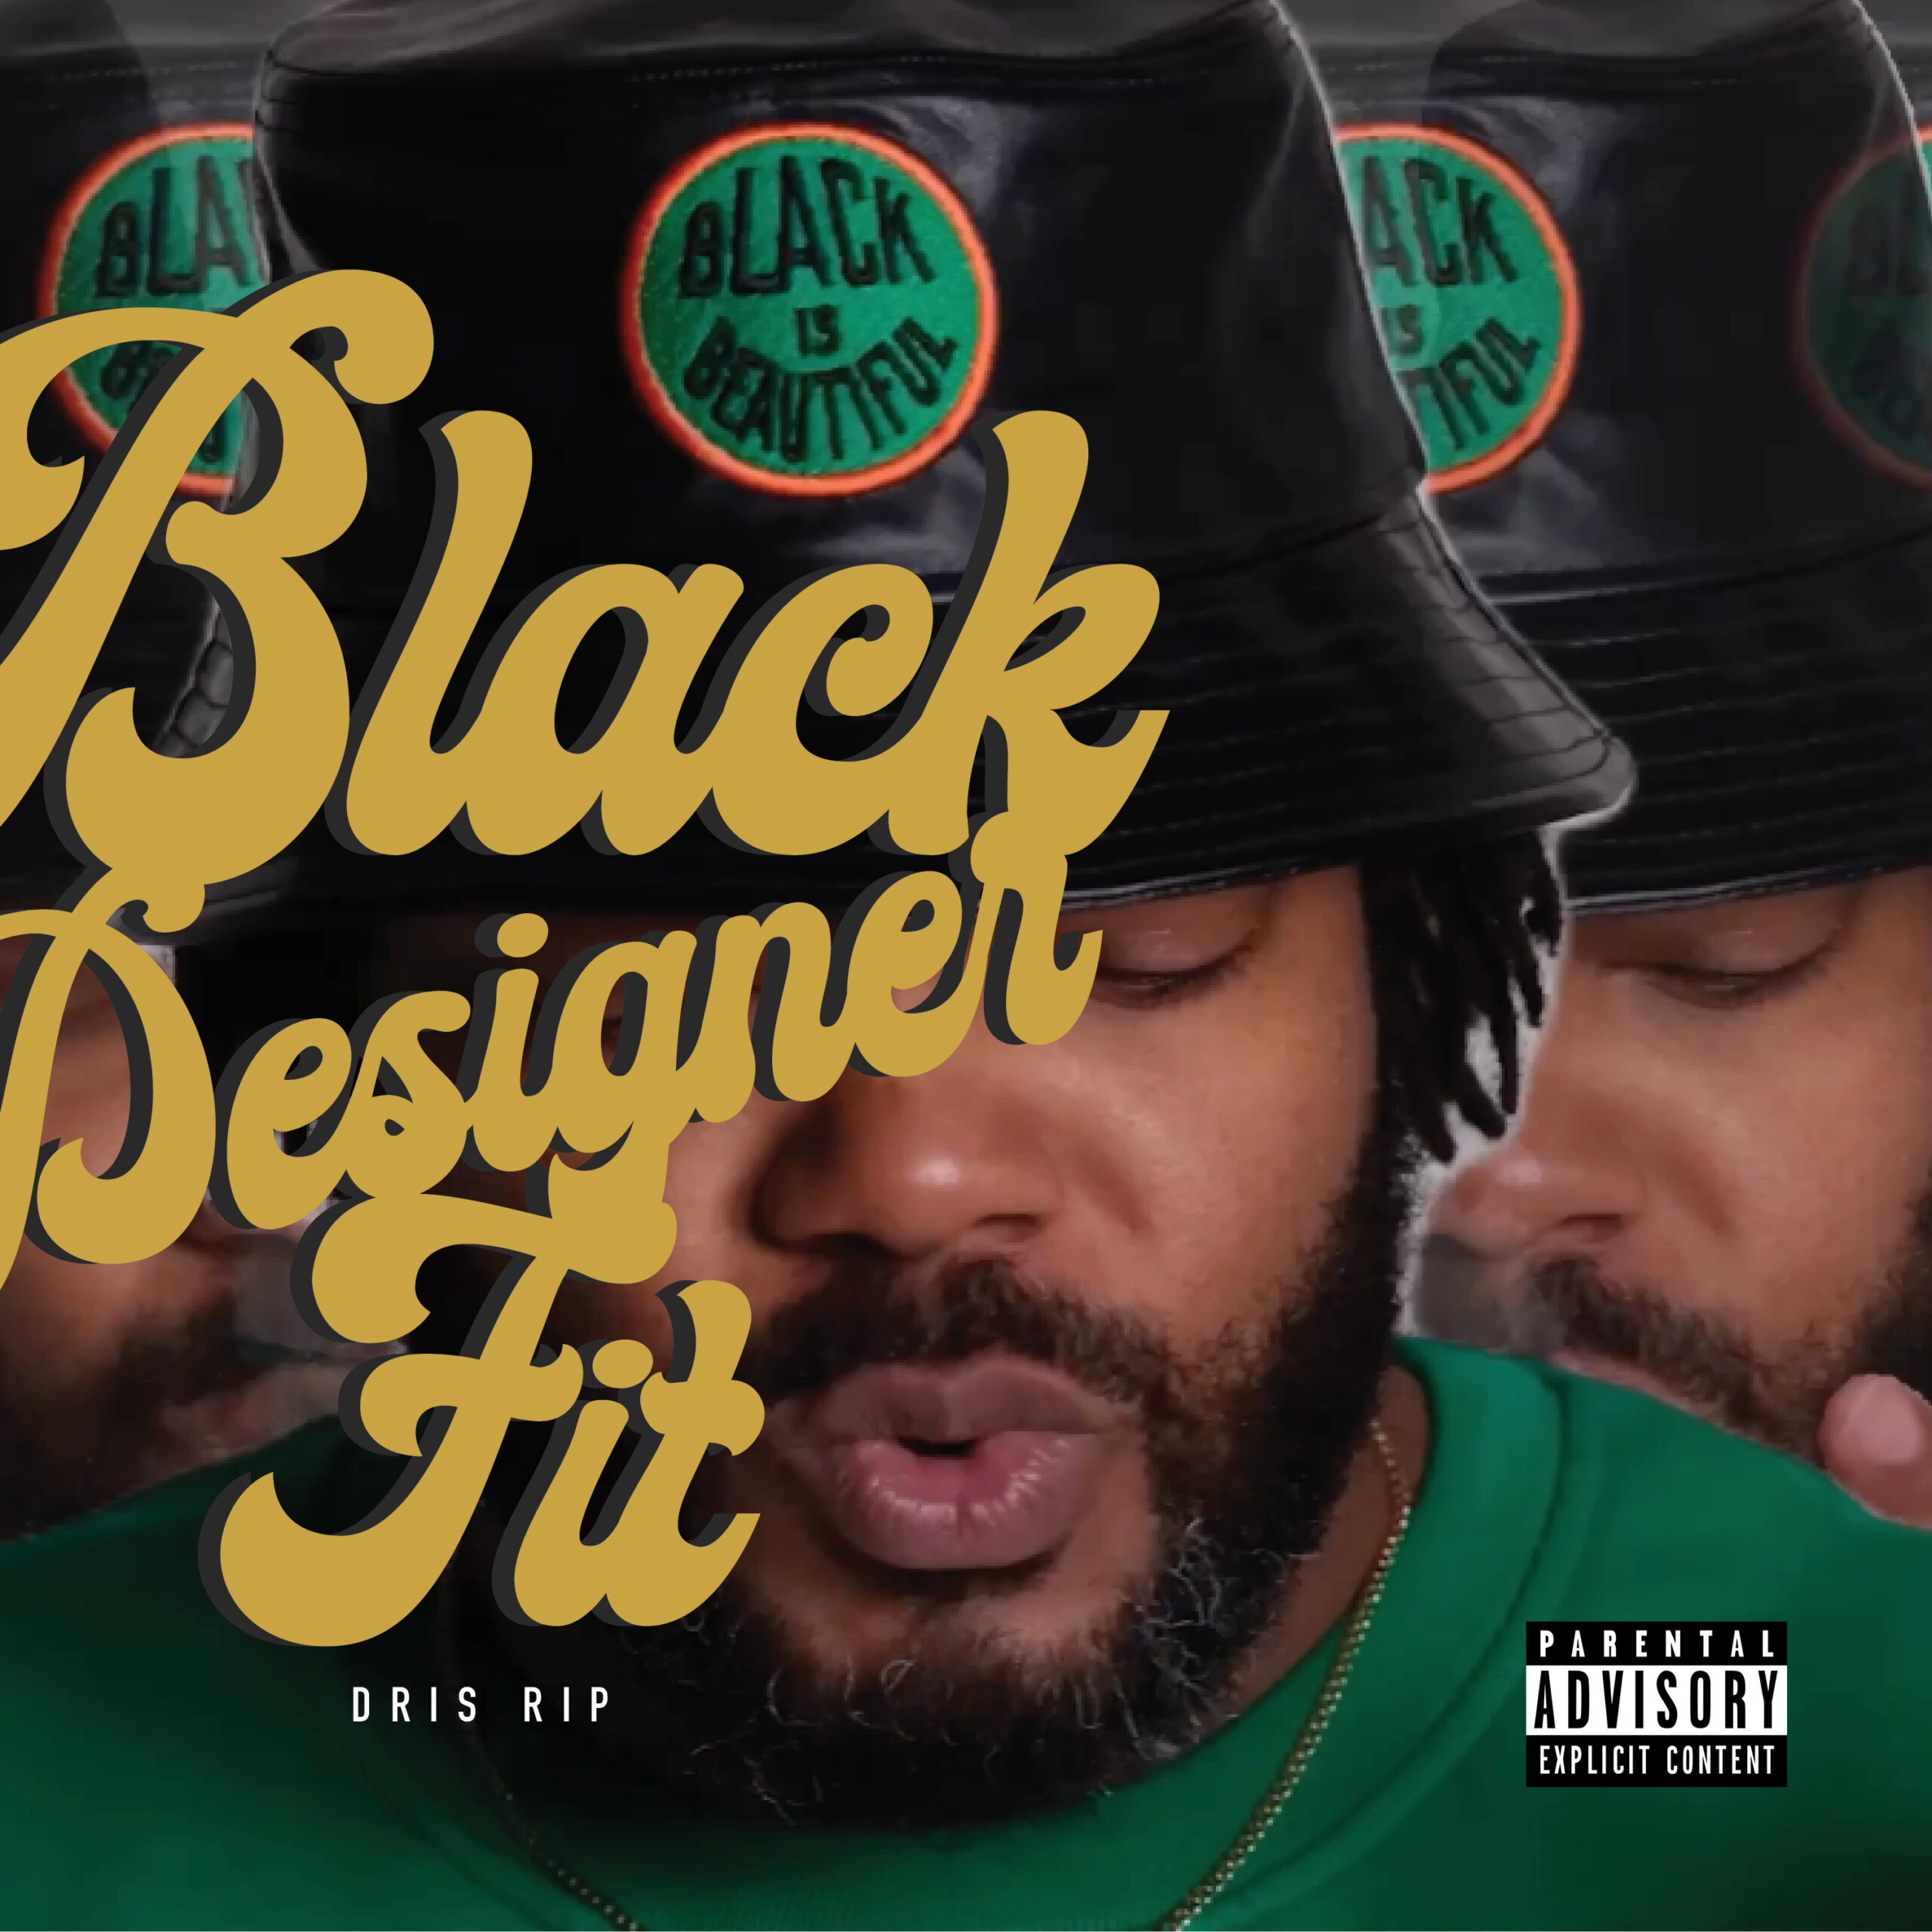 BK's Dris Rip Tributes Hip Hop Culture In "Black Designer Fit" Video